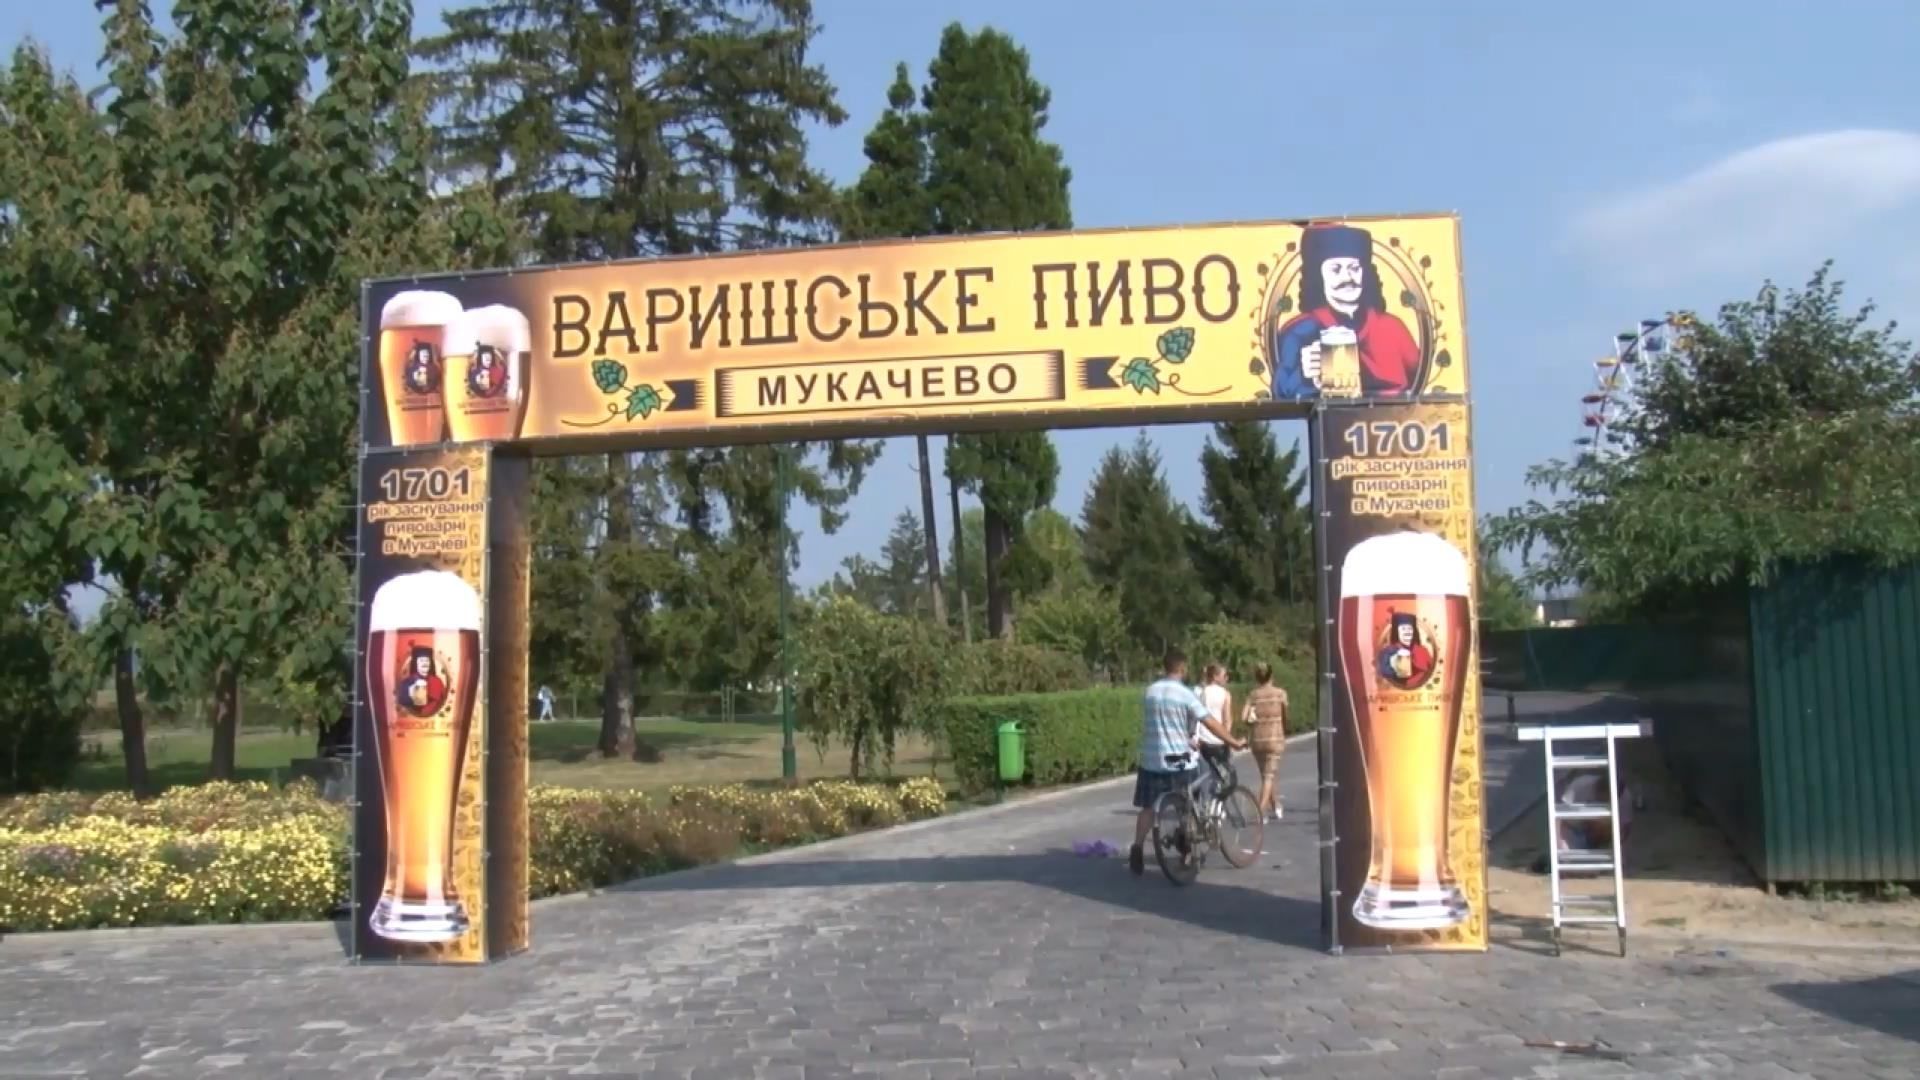 Перший фестиваль авторського пива стартував у Мукачевому